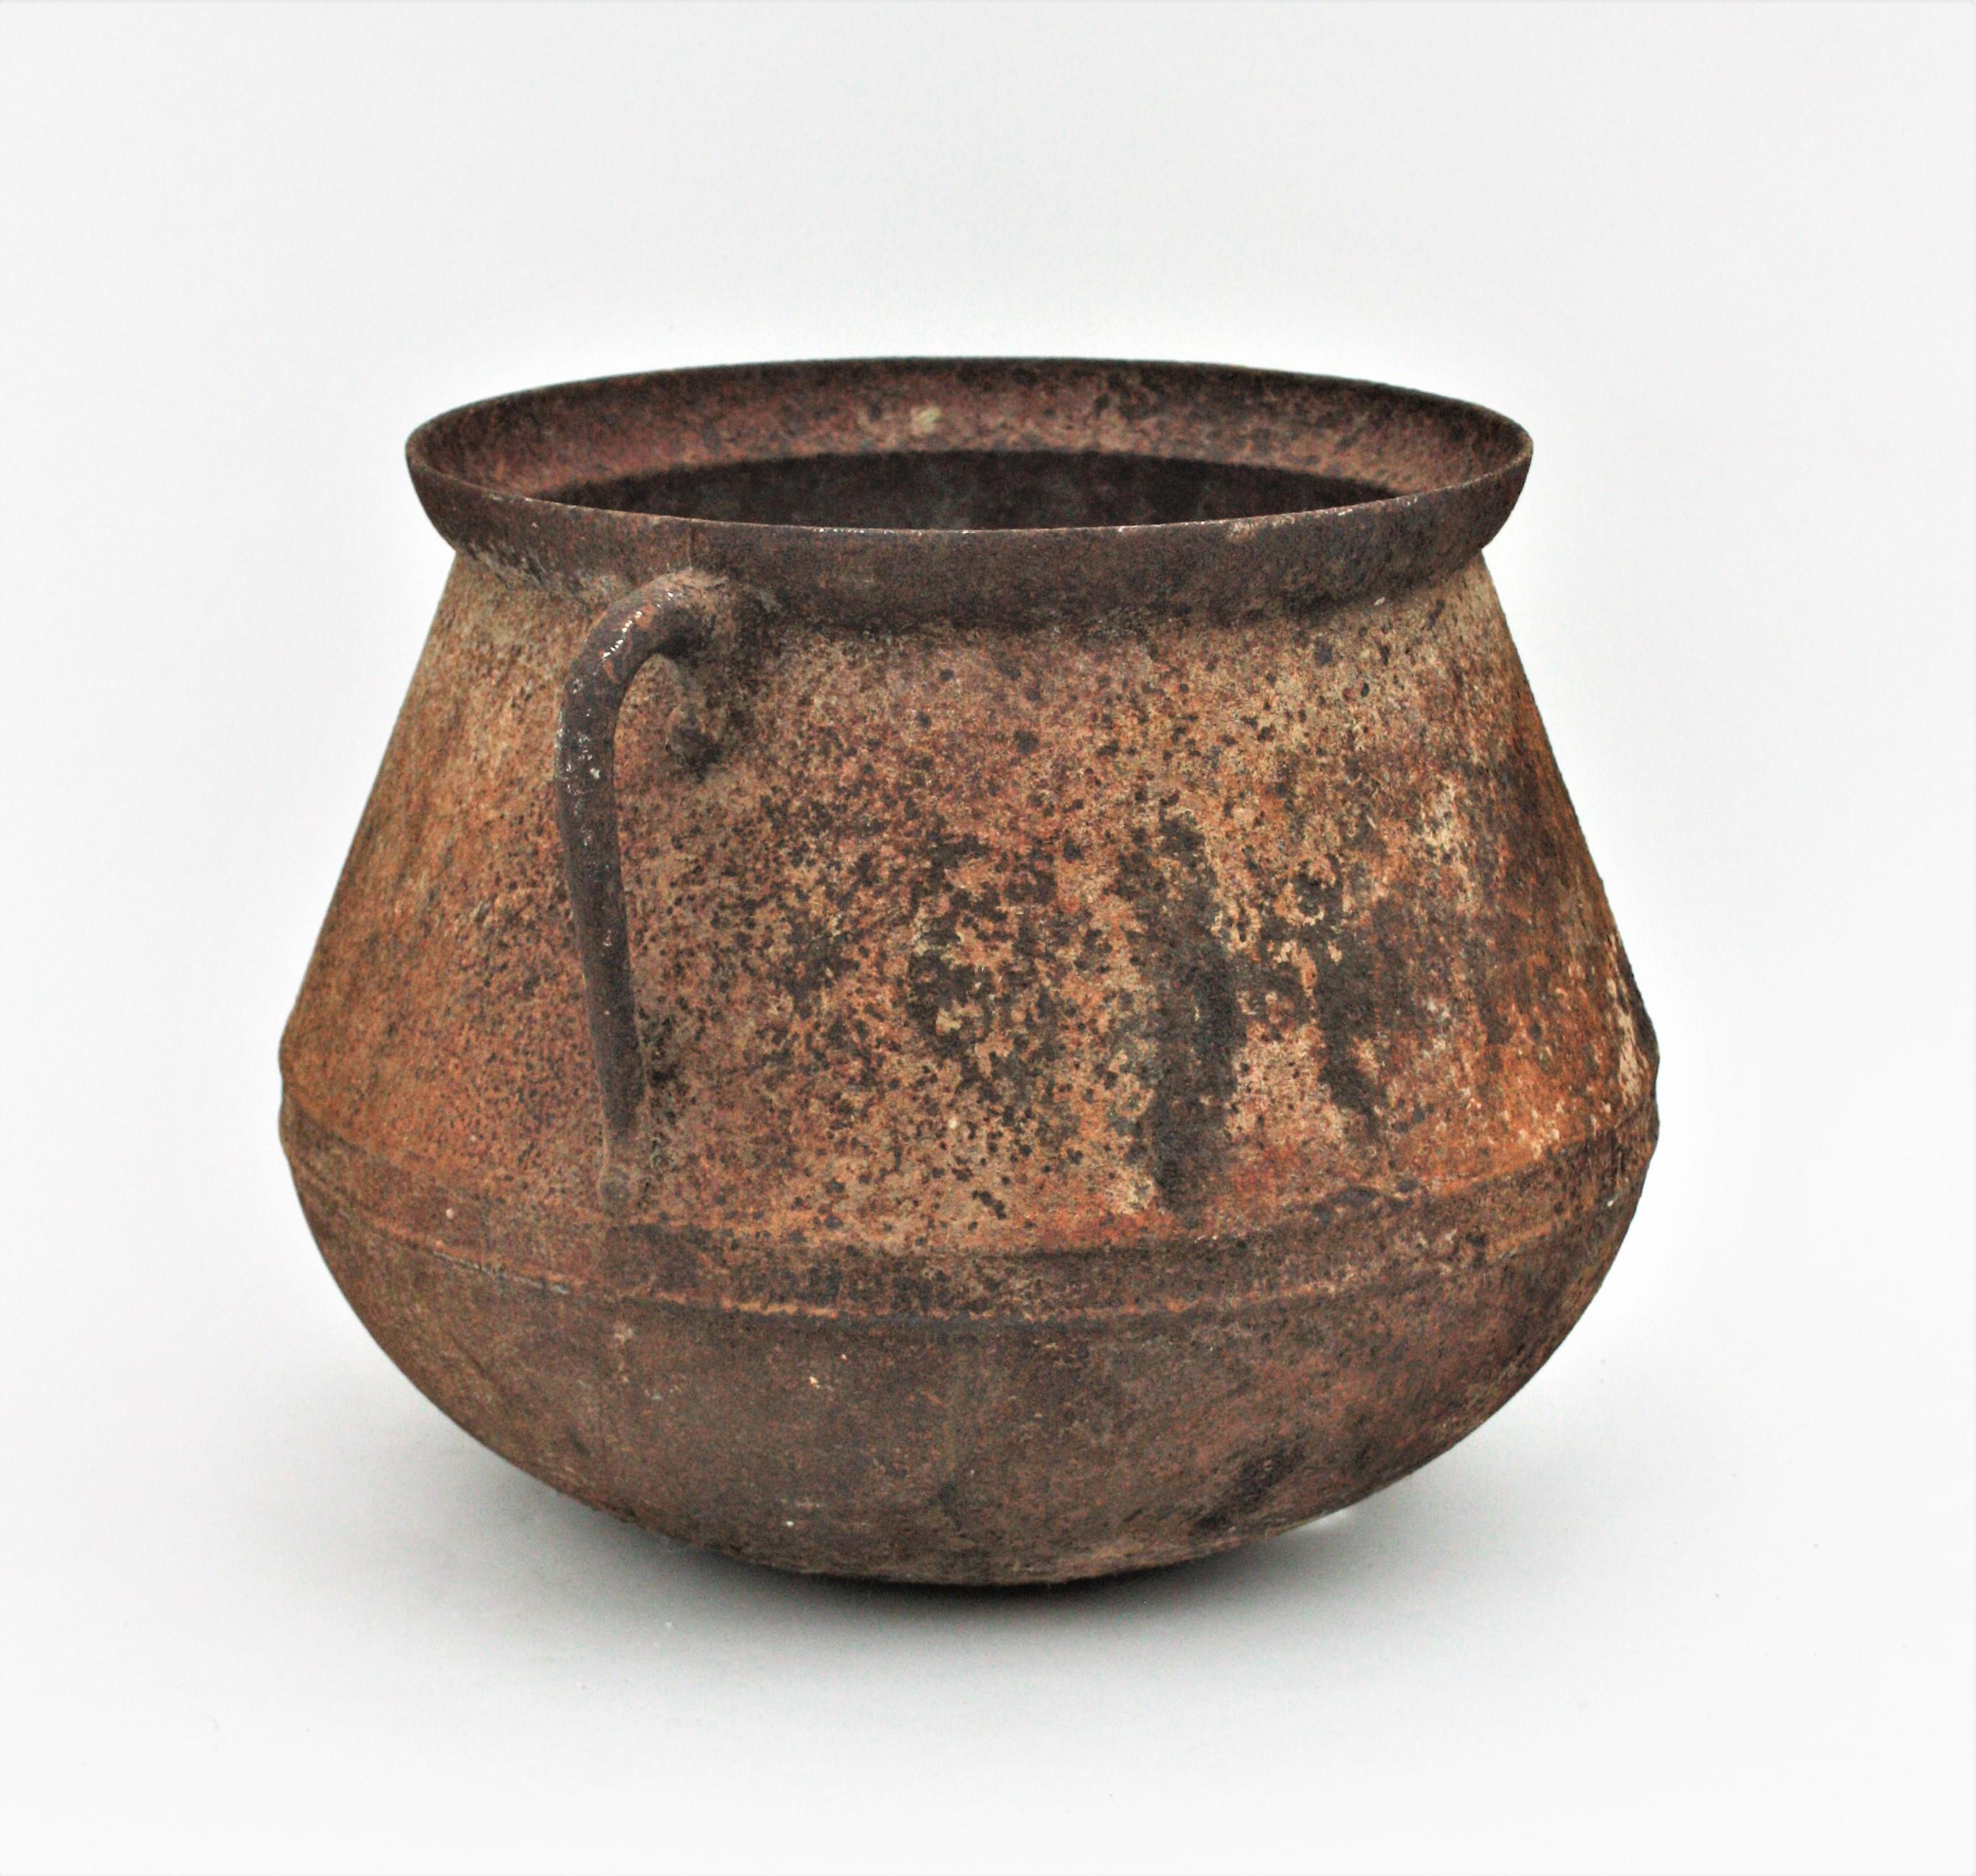 20th Century Spanish Rustic Iron Cauldron Pot or Vessel with Rusty Original Patina For Sale